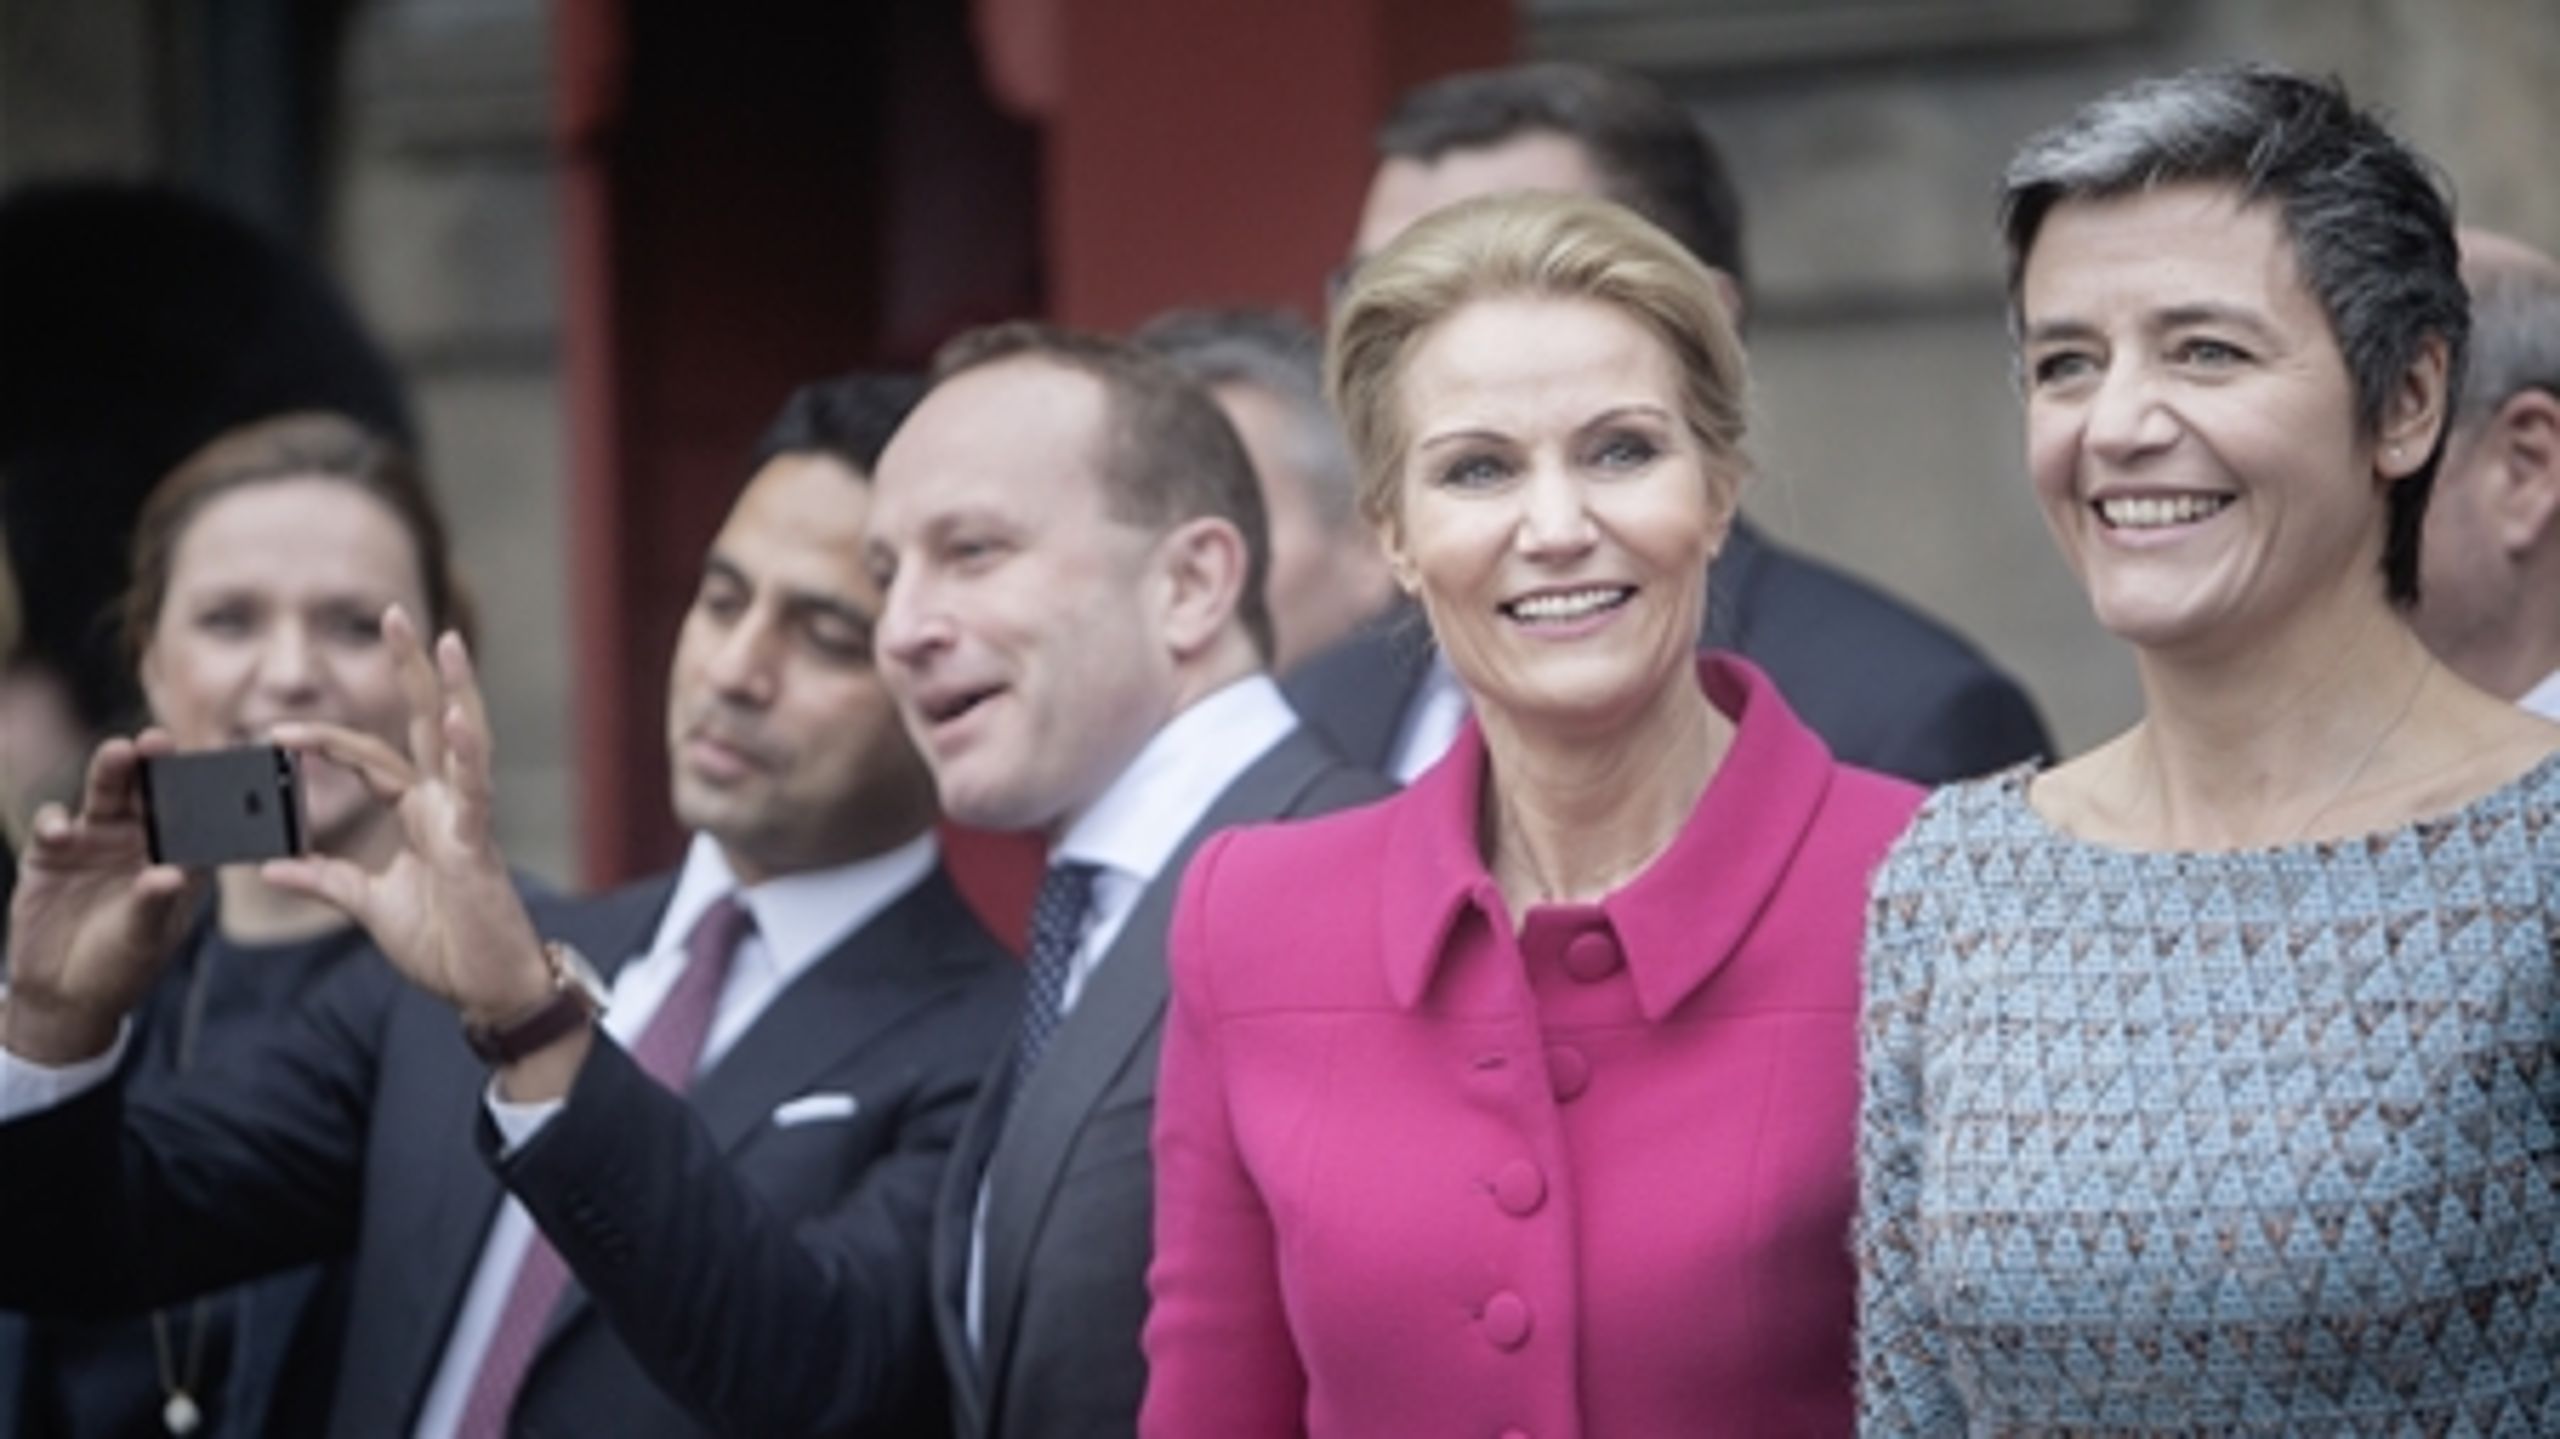 Margrethe Vestager har god grund til at smile over rokaden, vurderer Altinget.dks analytiker Erik Holstein. 